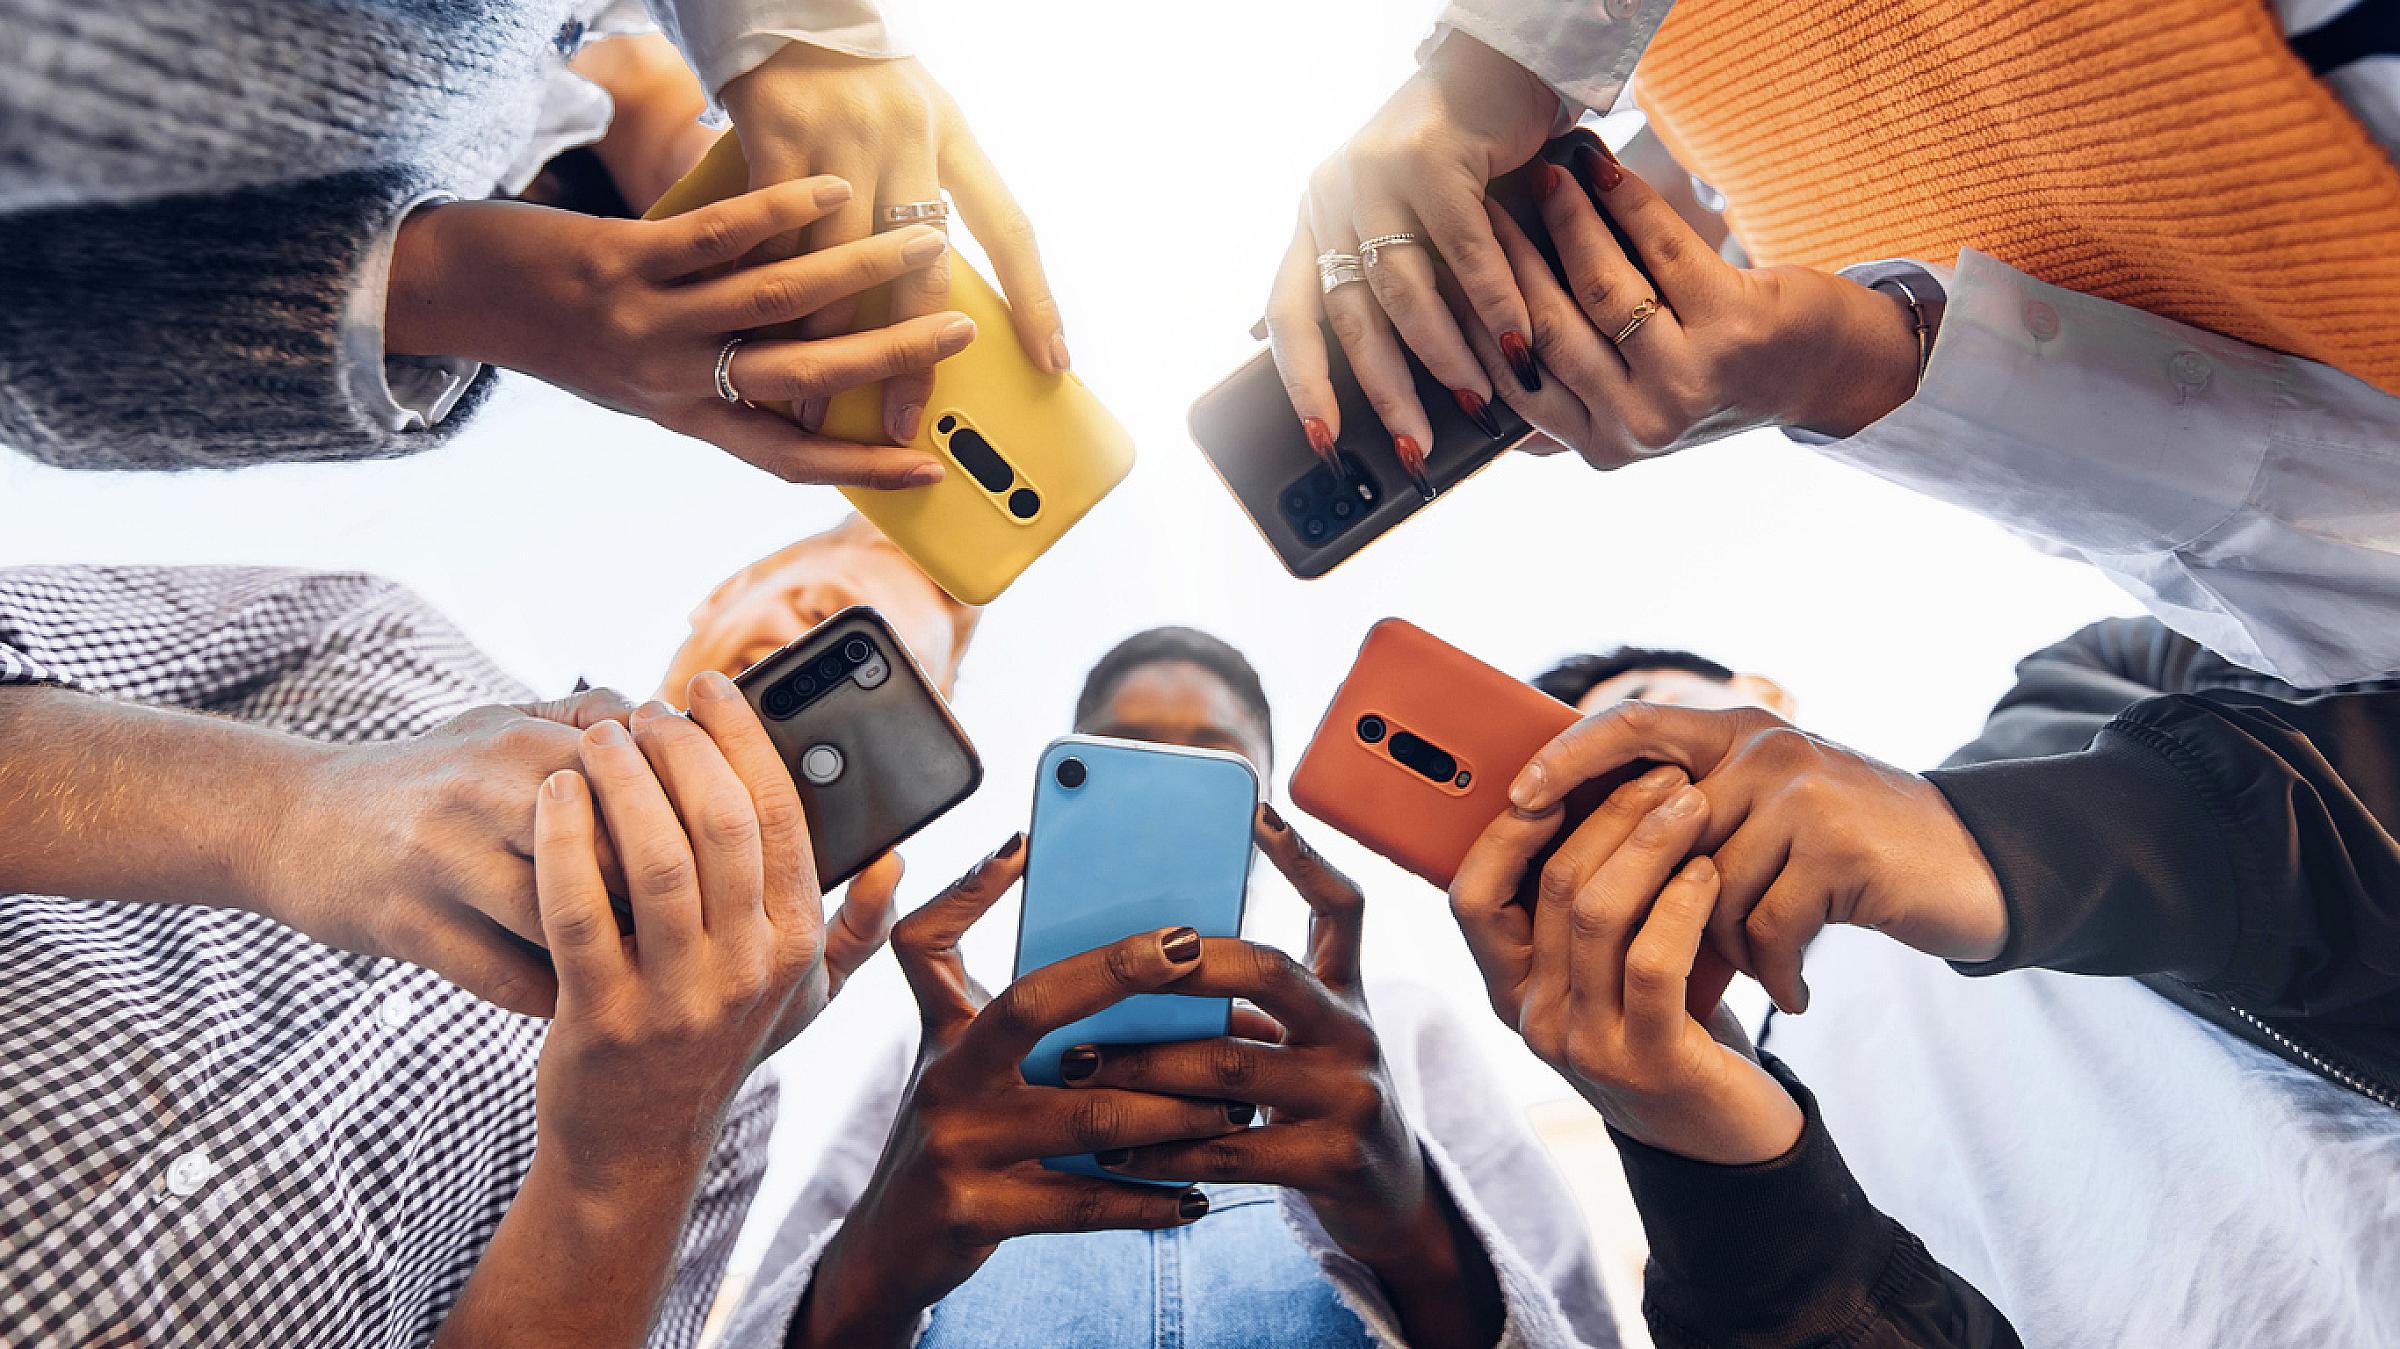 Teens in circle holding smart phones